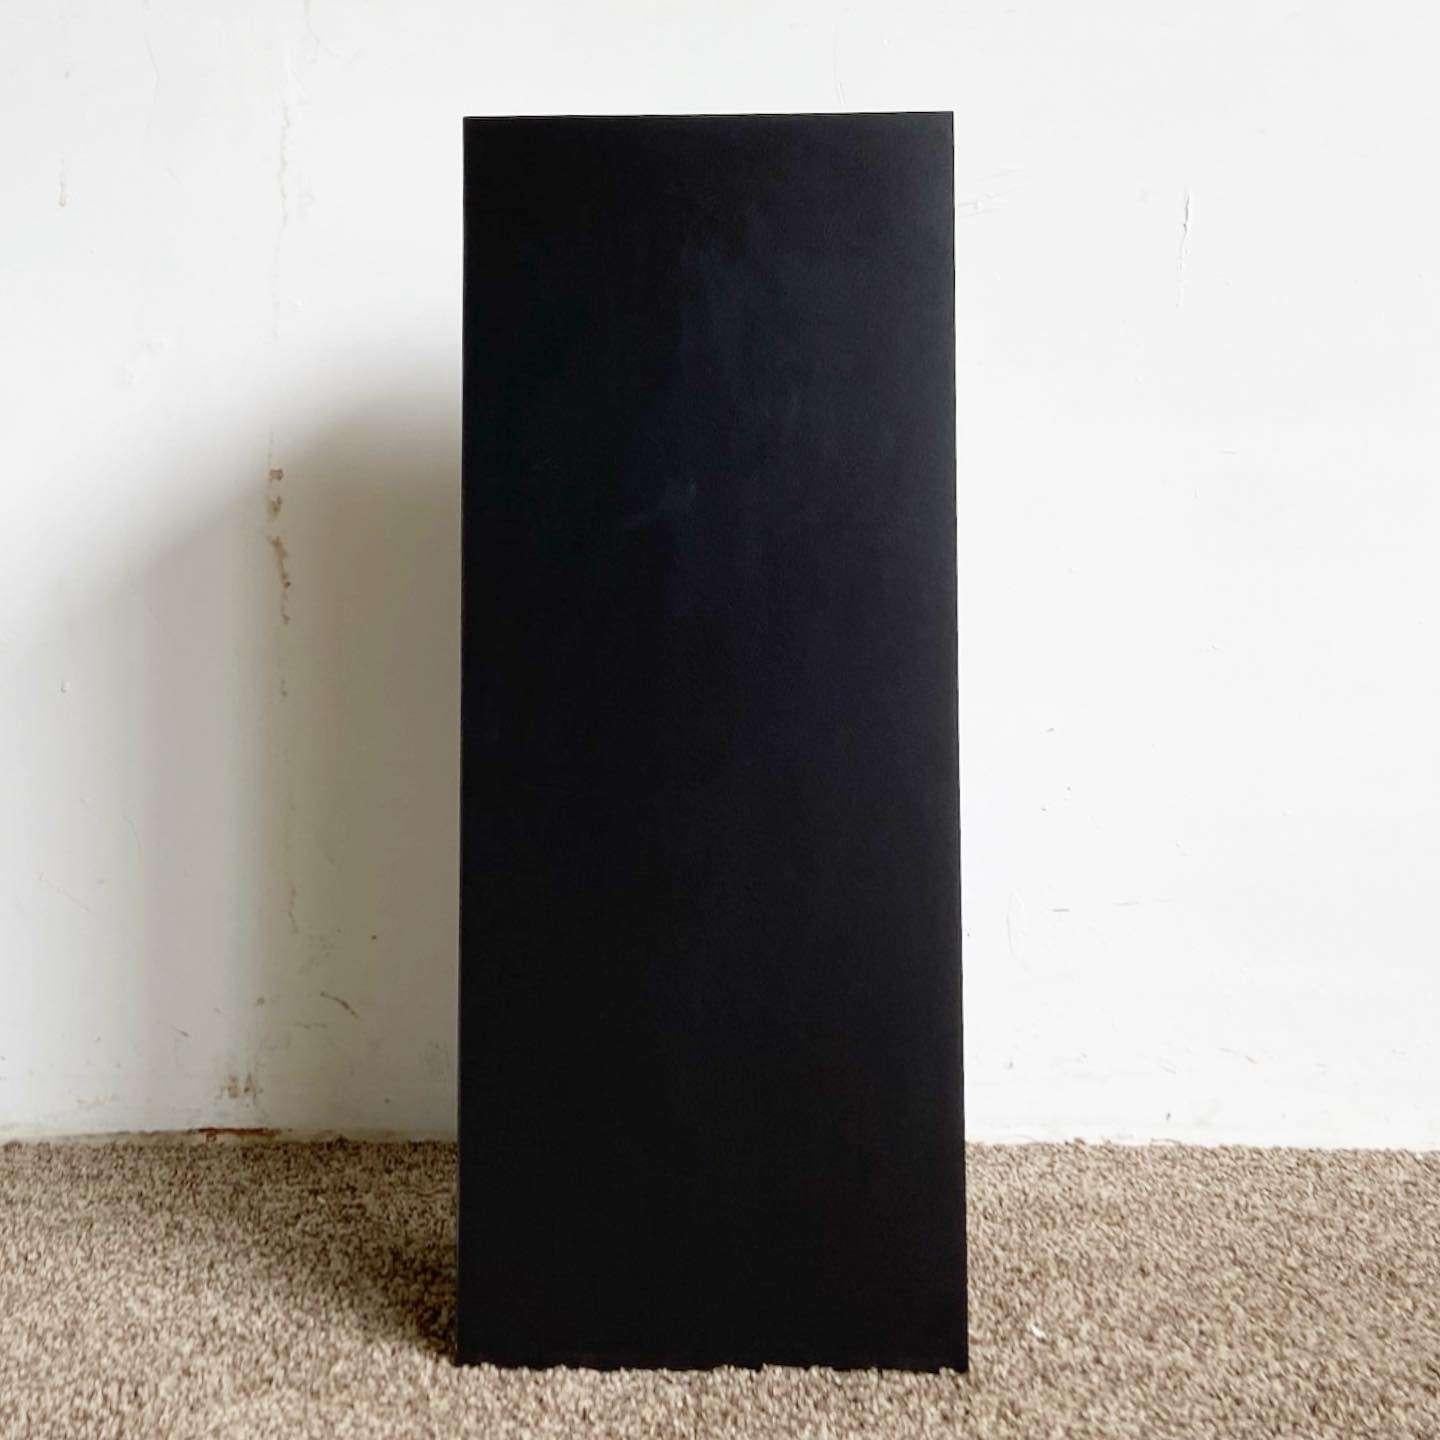 Wonderful vintage postmodern square pedestal. Features a black matte laminate through the rectangular prism’s surface.
